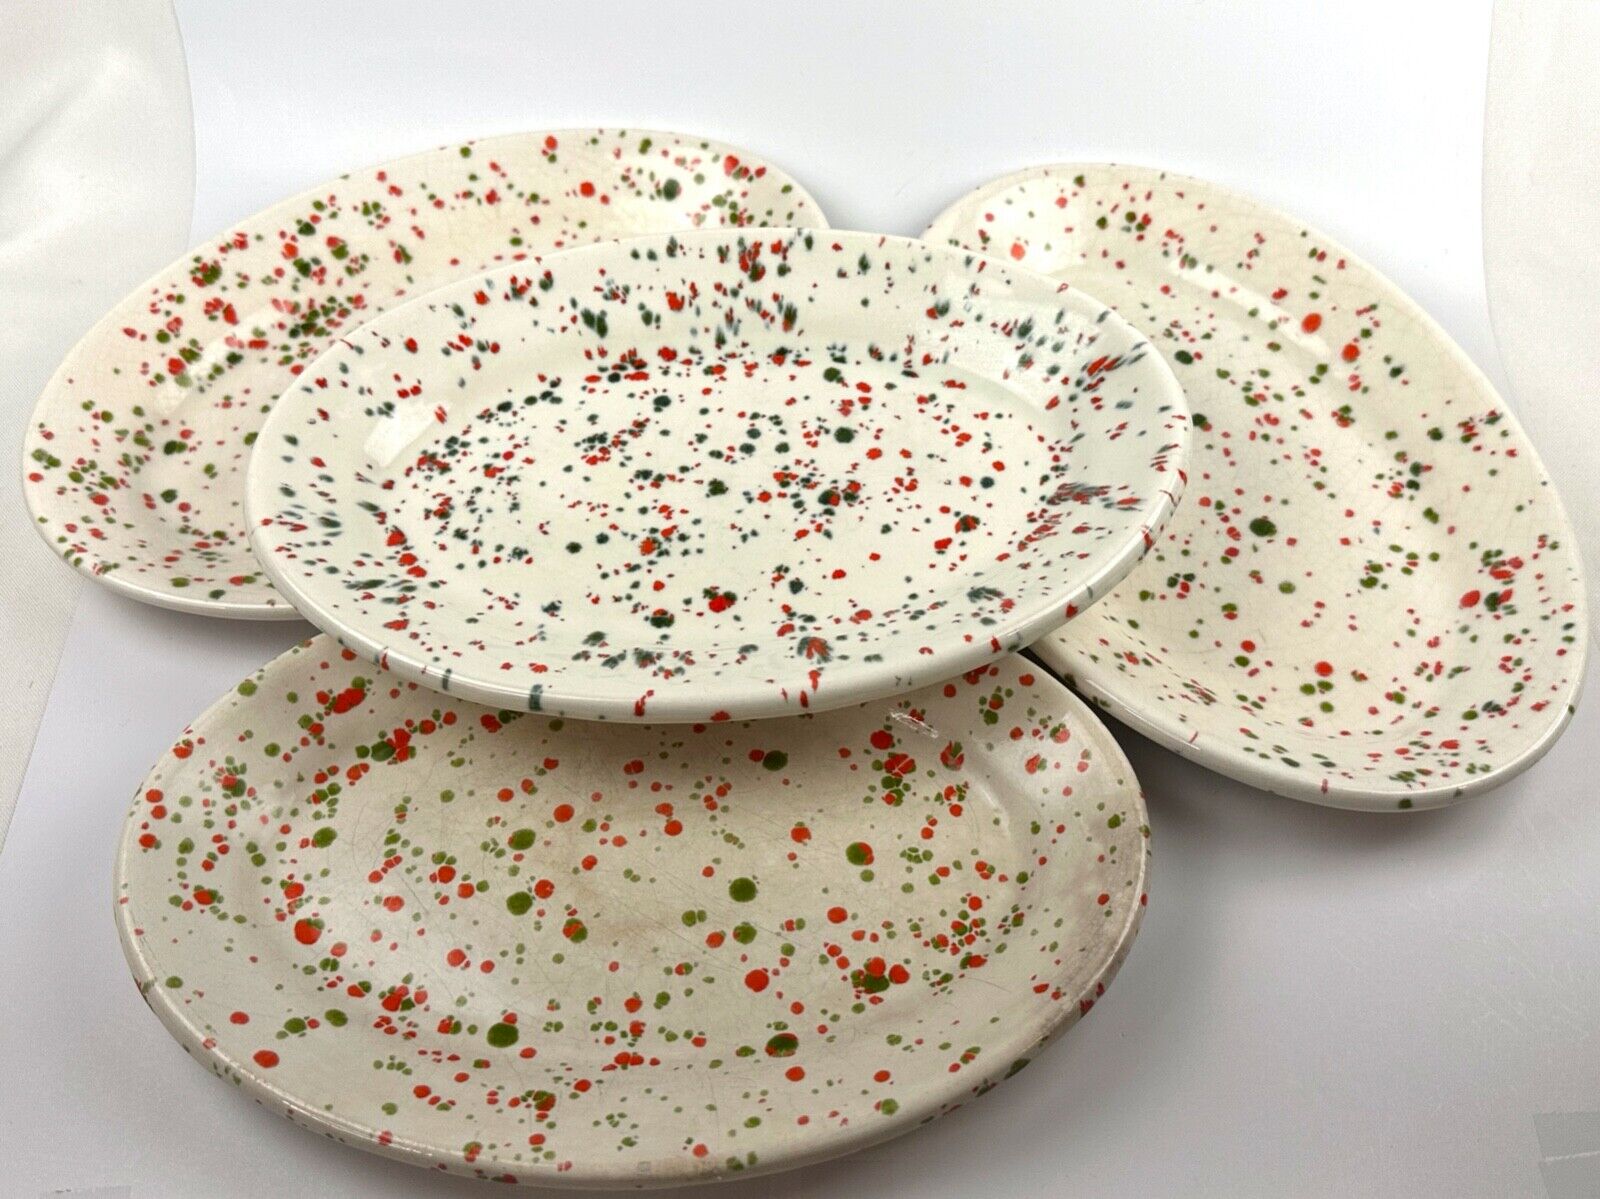 Set 4 - 1975 Vintage Hobbyist Confetti Ceramic Plates MCM Speckled Spatter